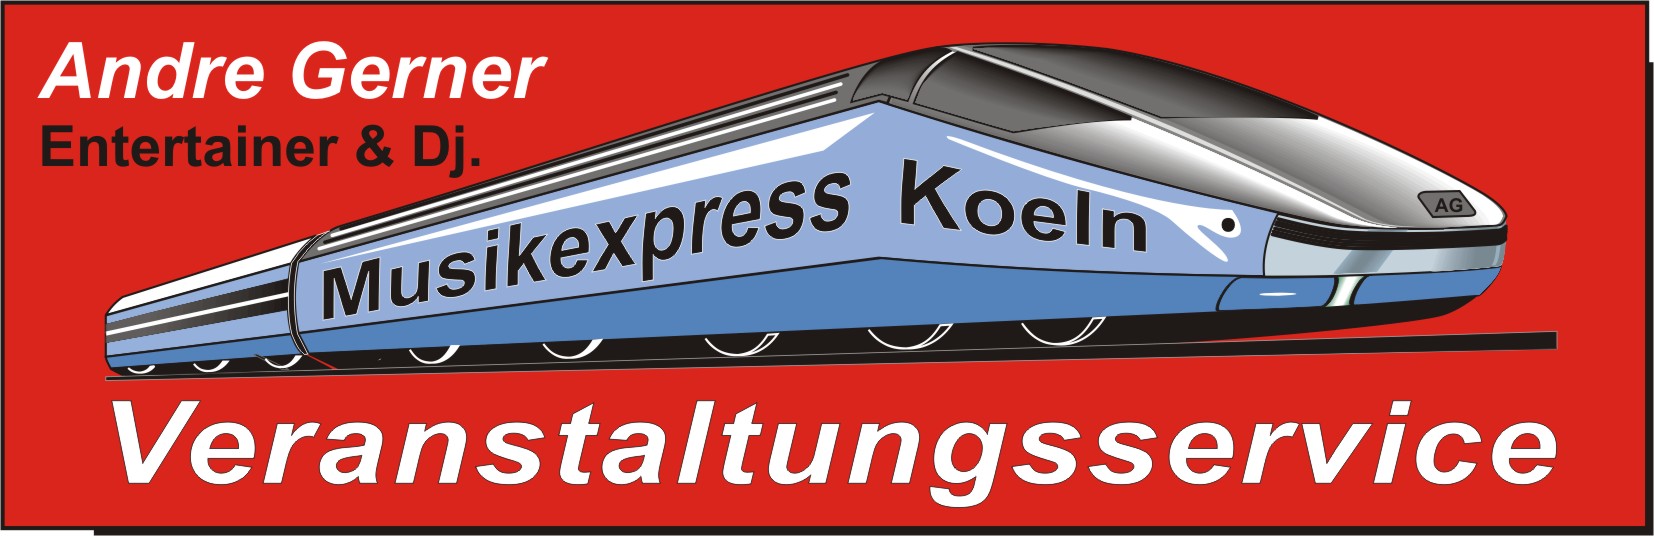 Logo Musikexpress koeln